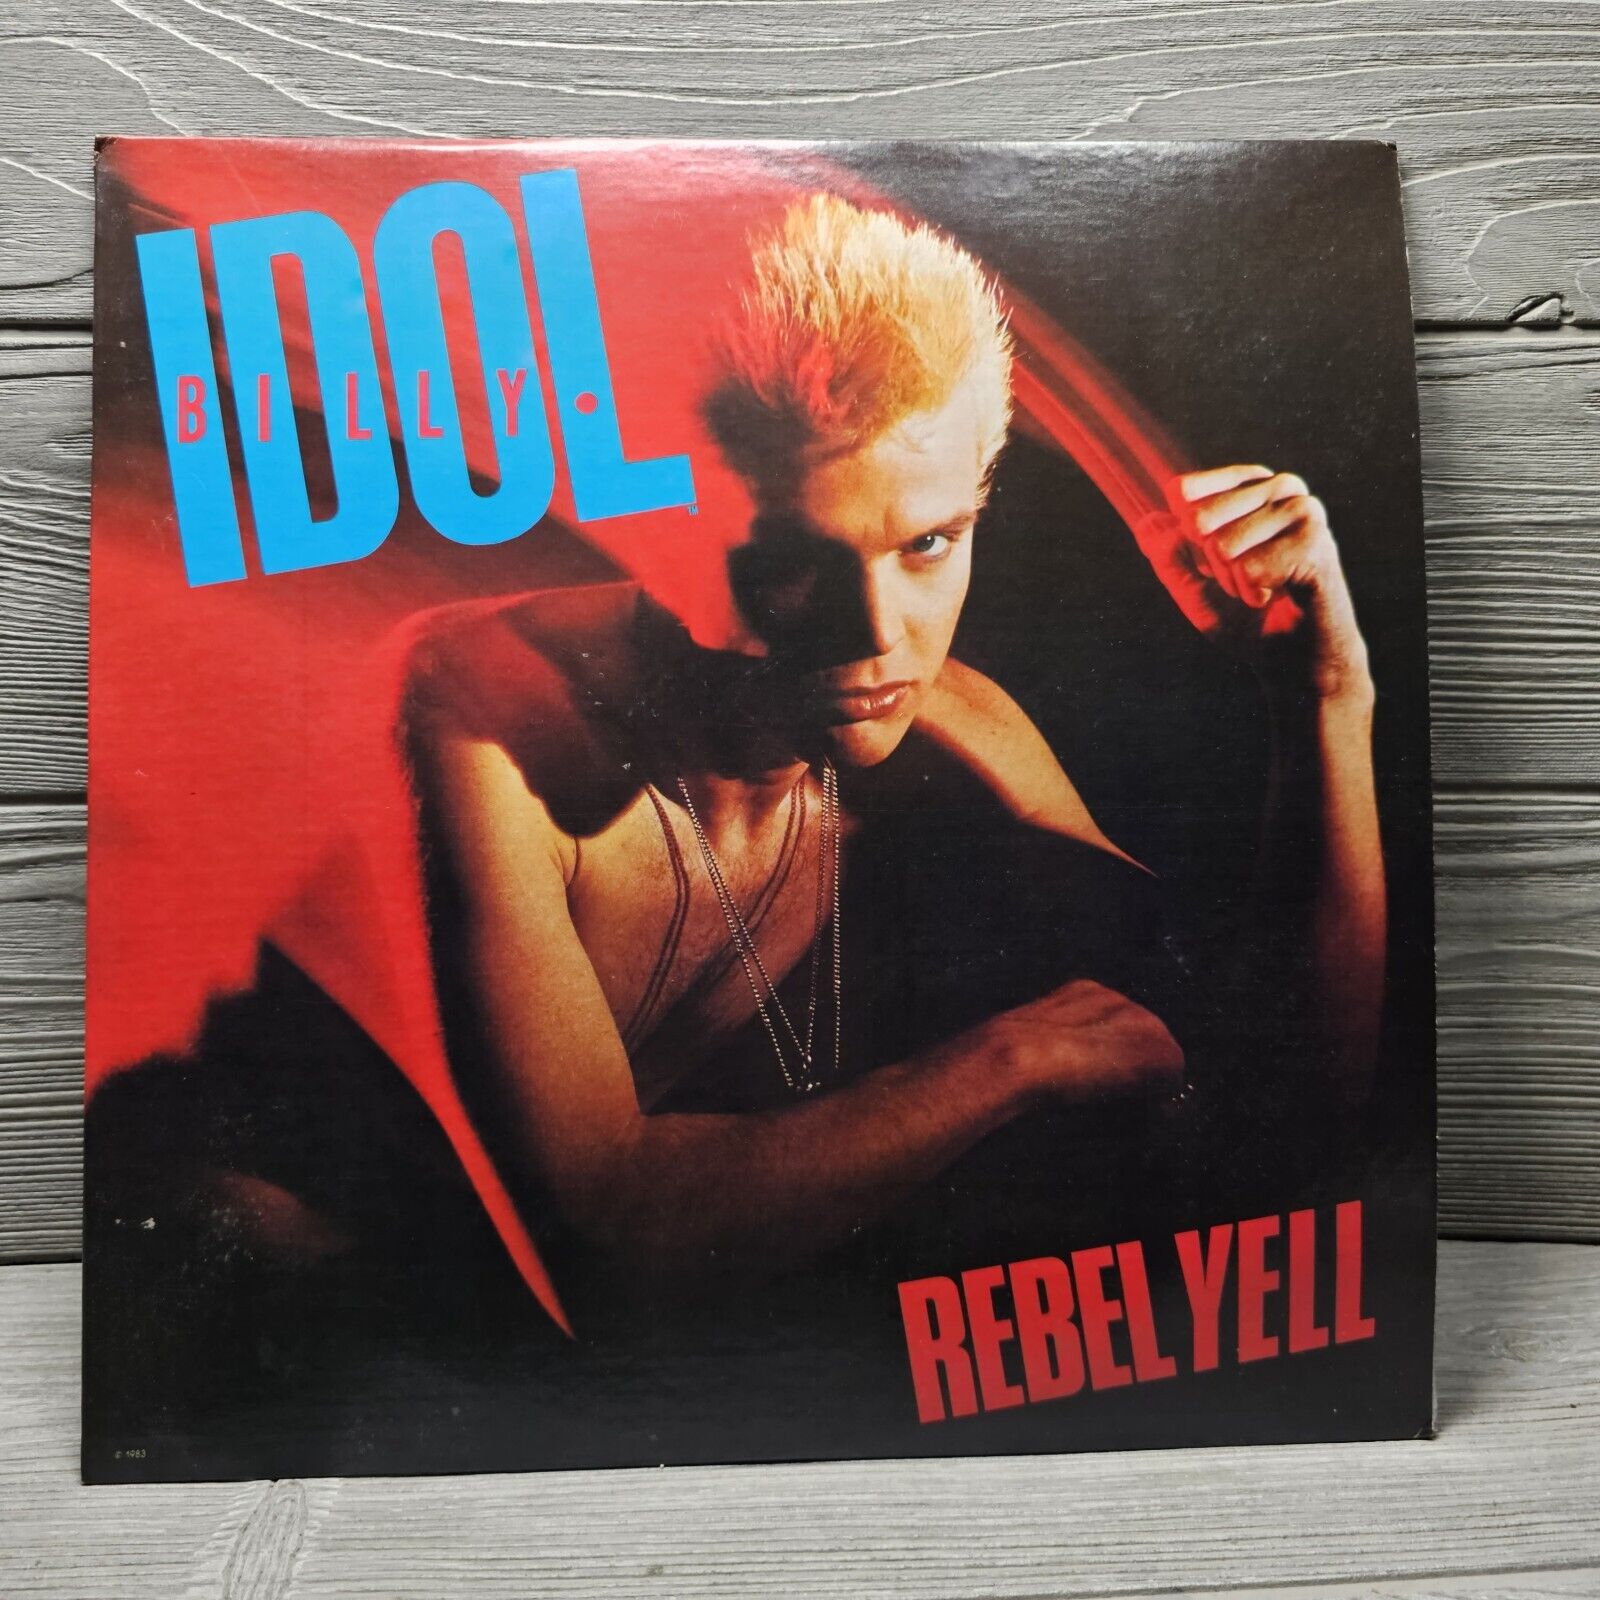 BILLY IDOL  “REBEL YELL” LP 1983 CHRYSALIS FV41450